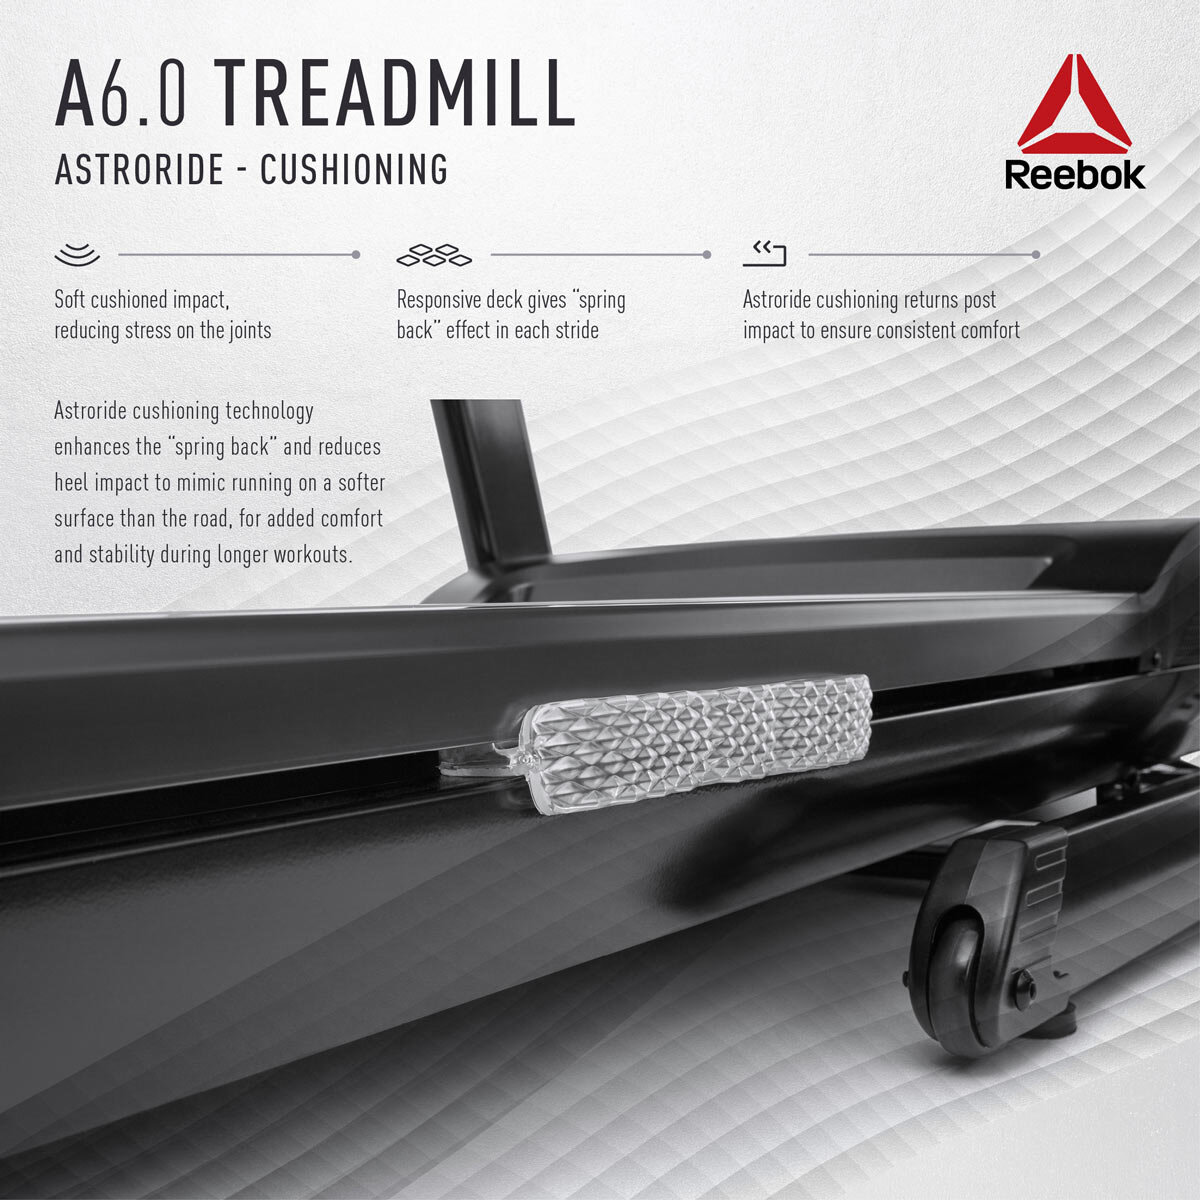 Reebok Astroride A6 Treadmill